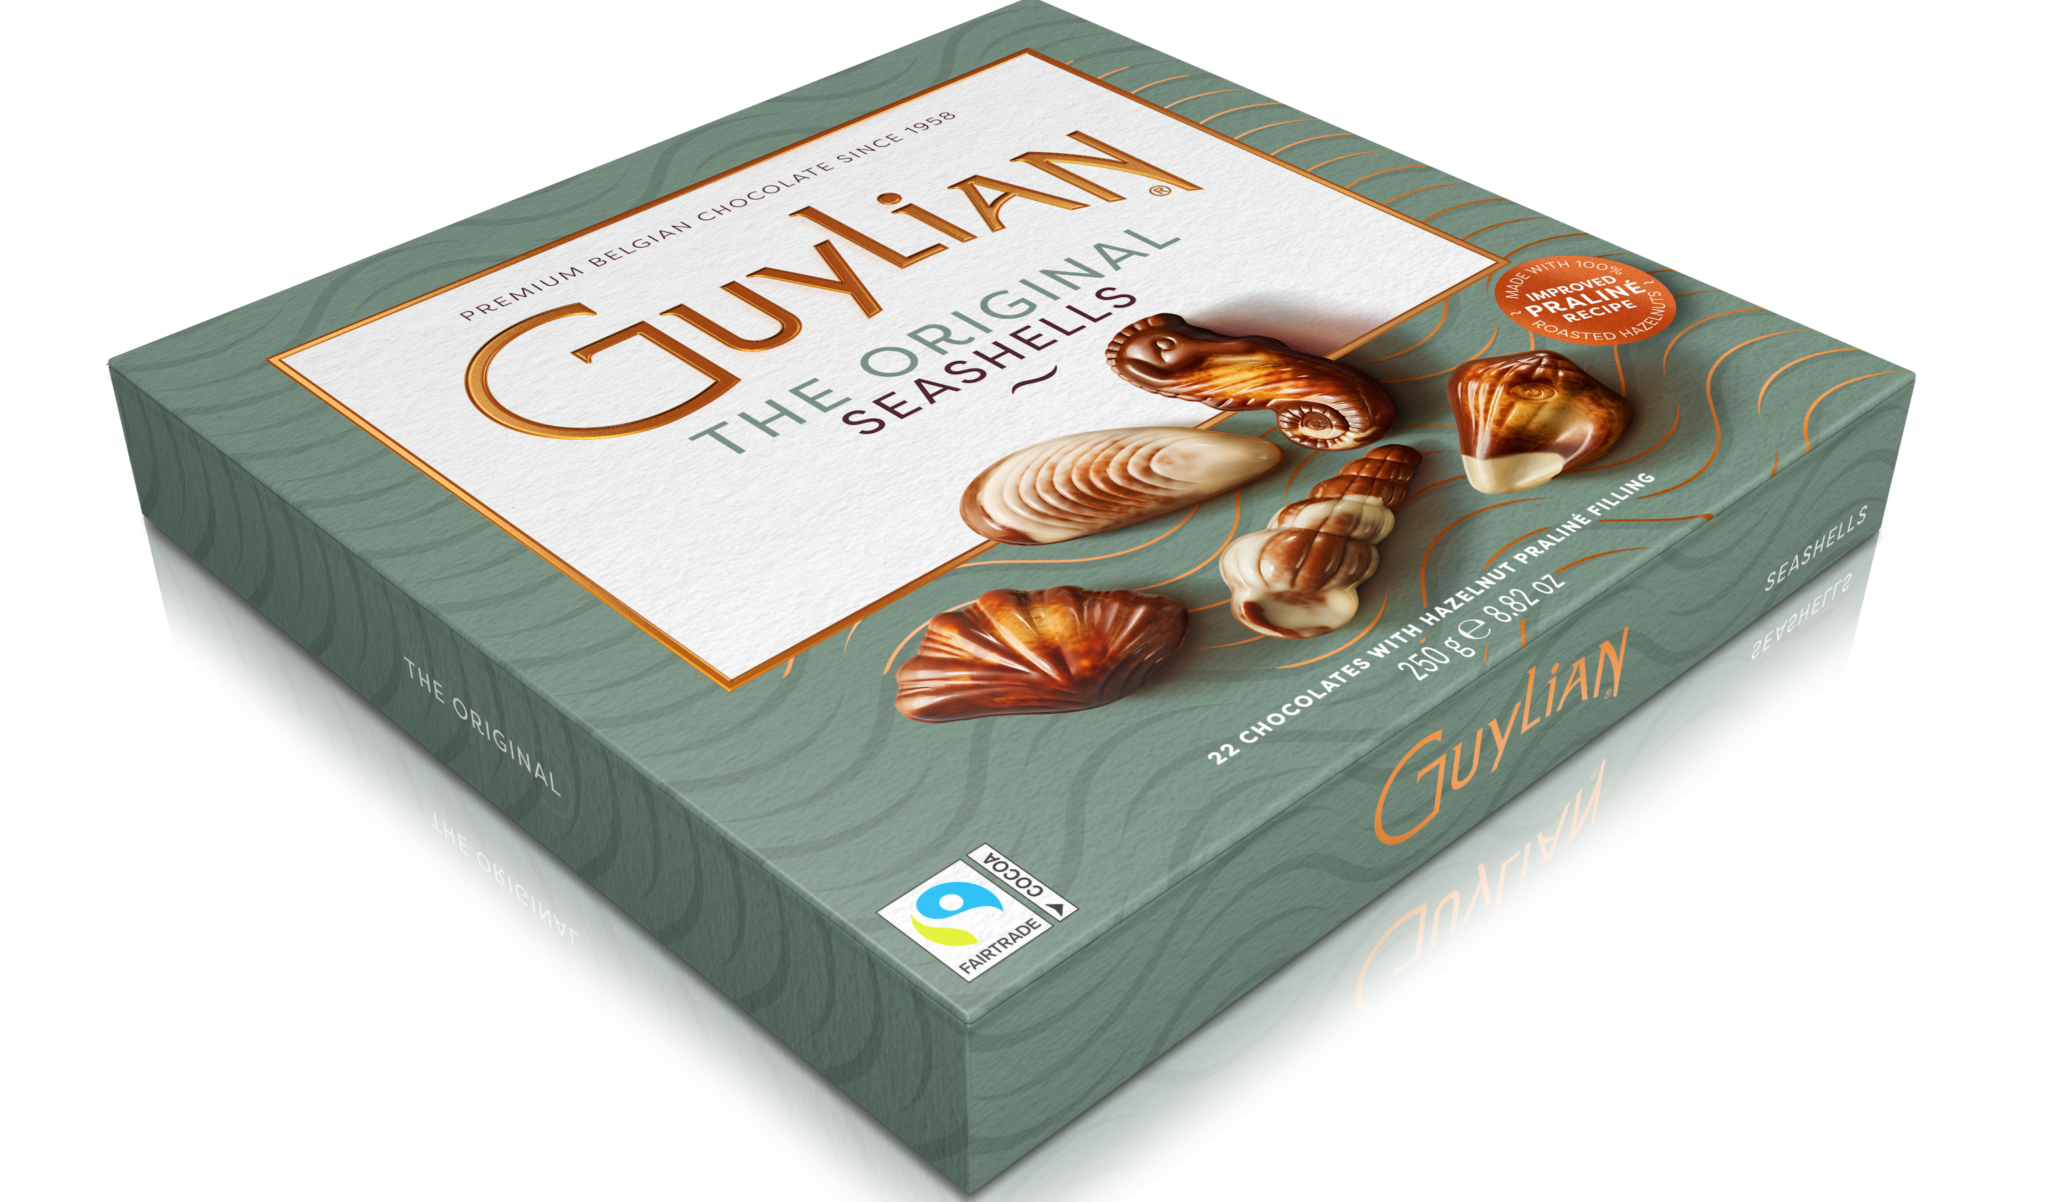 Guylian switches to 100 percent fairtrade cocoa - Fairtrade Foundation